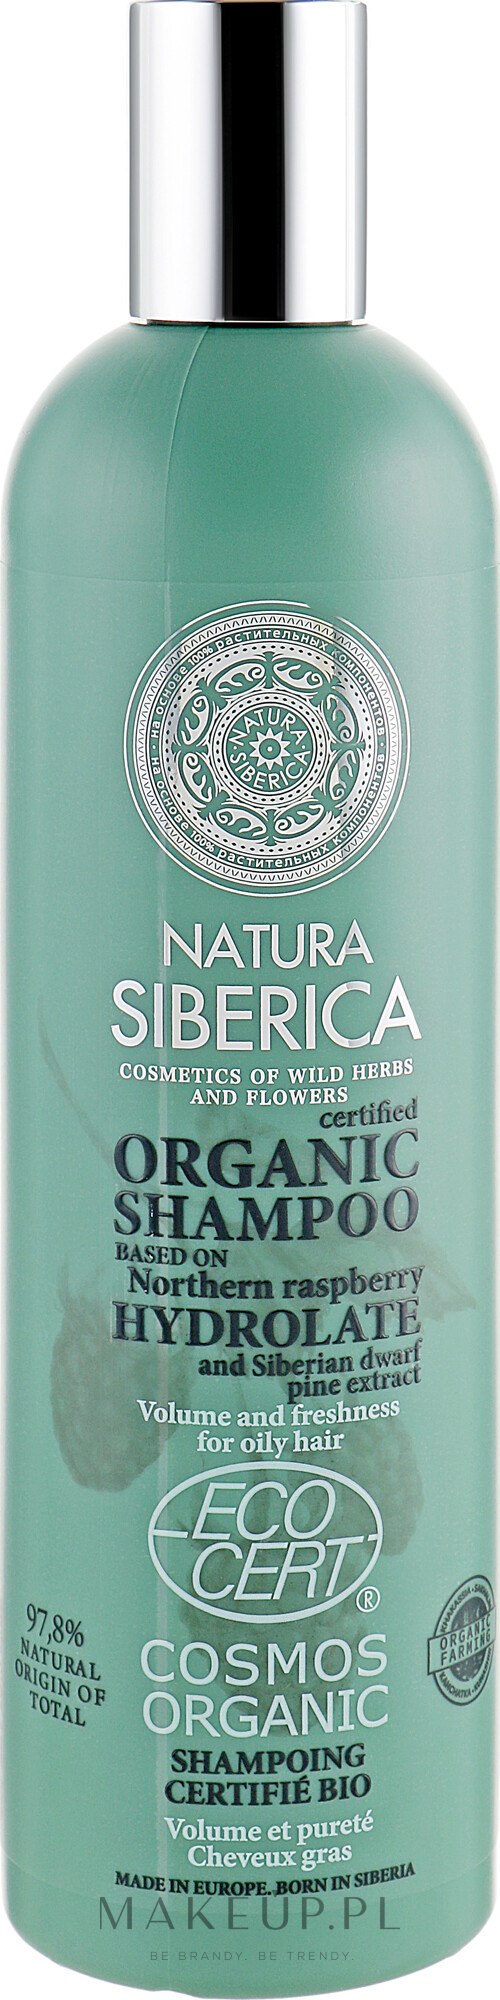 natura siberica szampon włosy średnioporowate